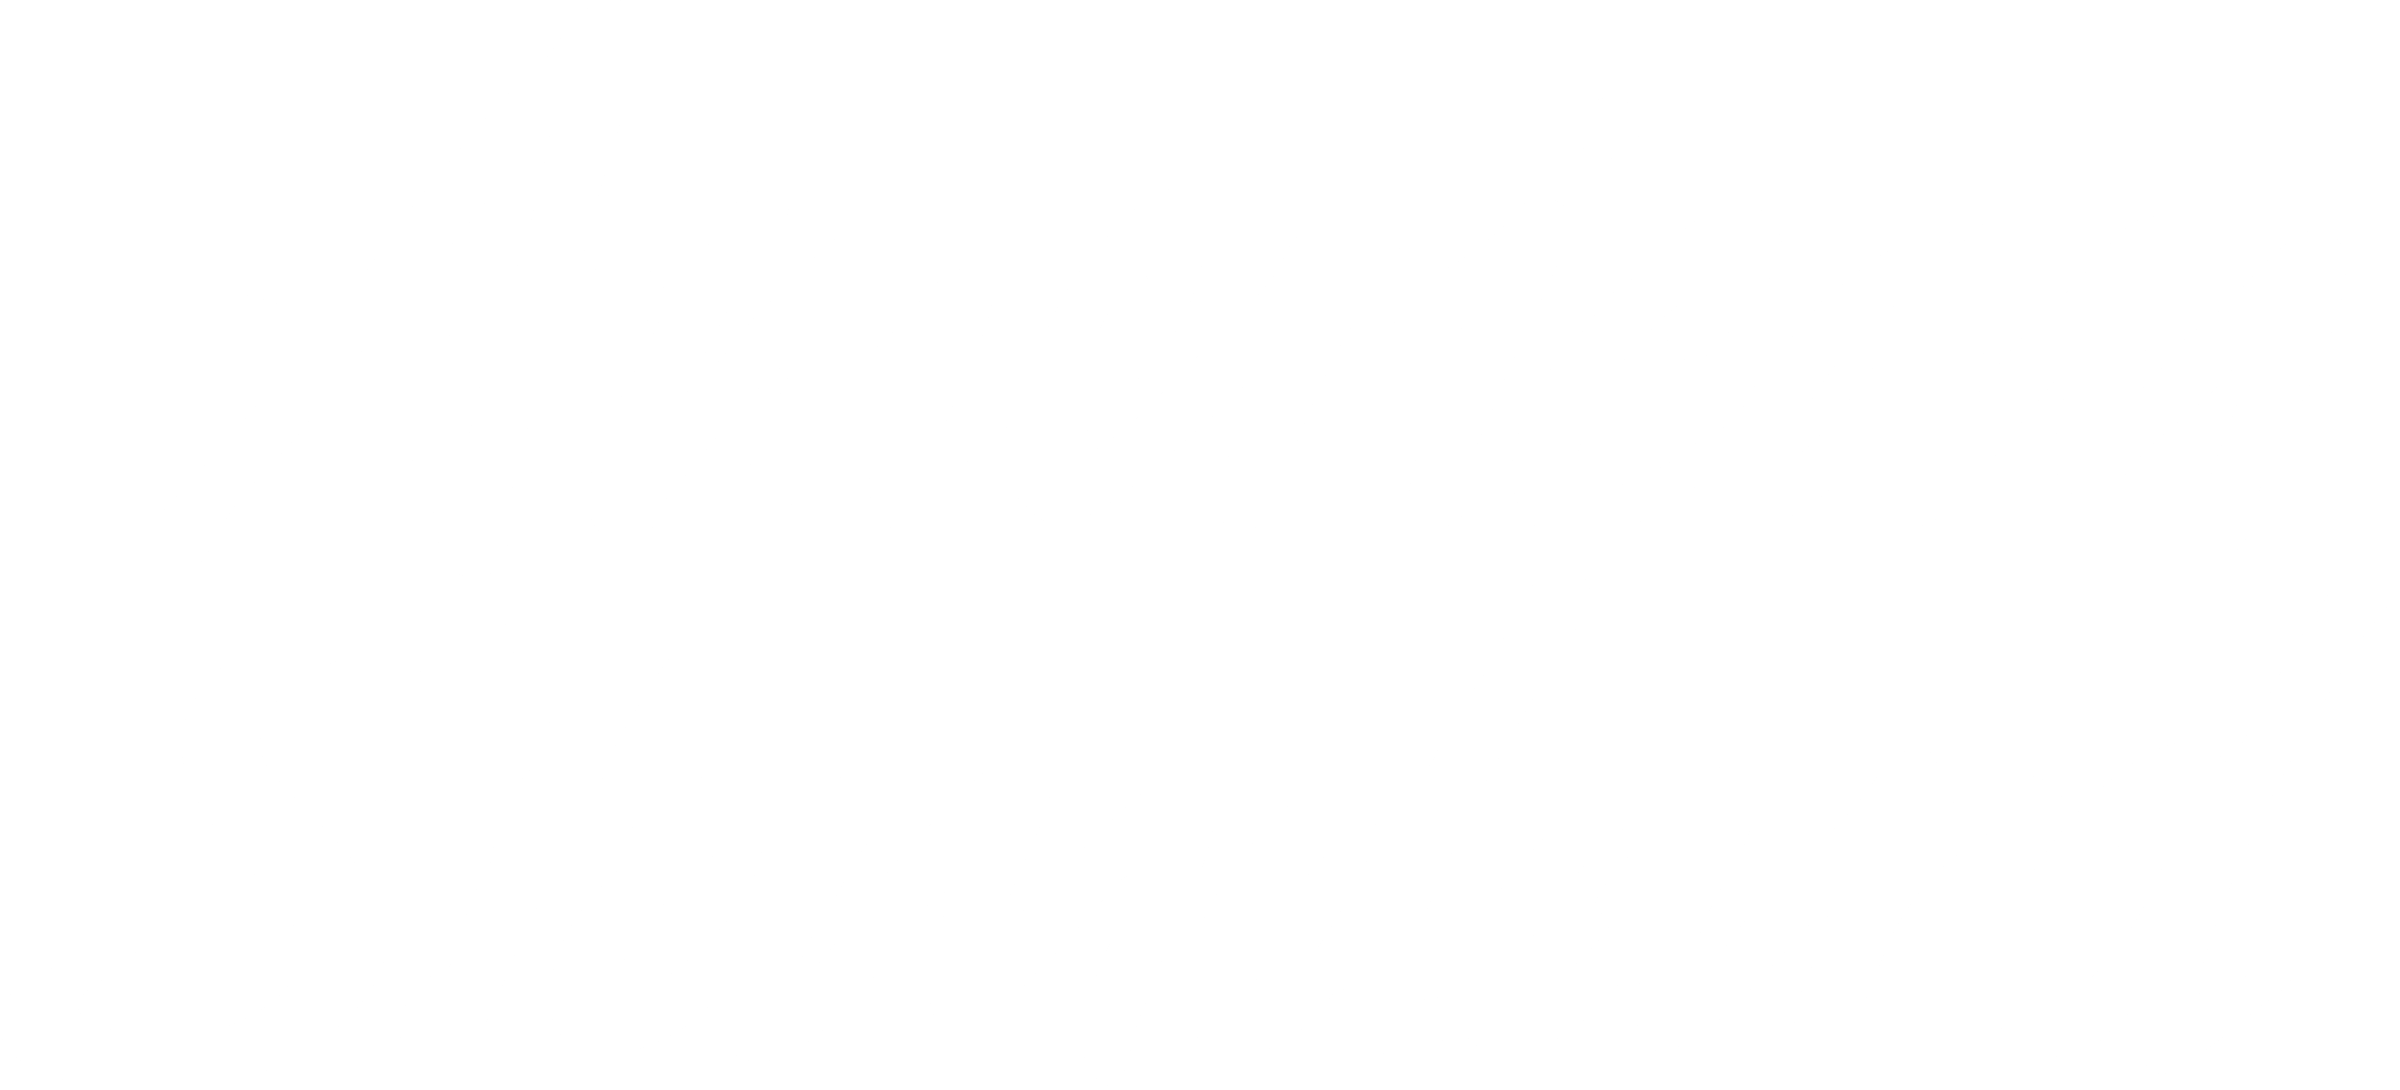 american-standard-1-logo-black-and-white